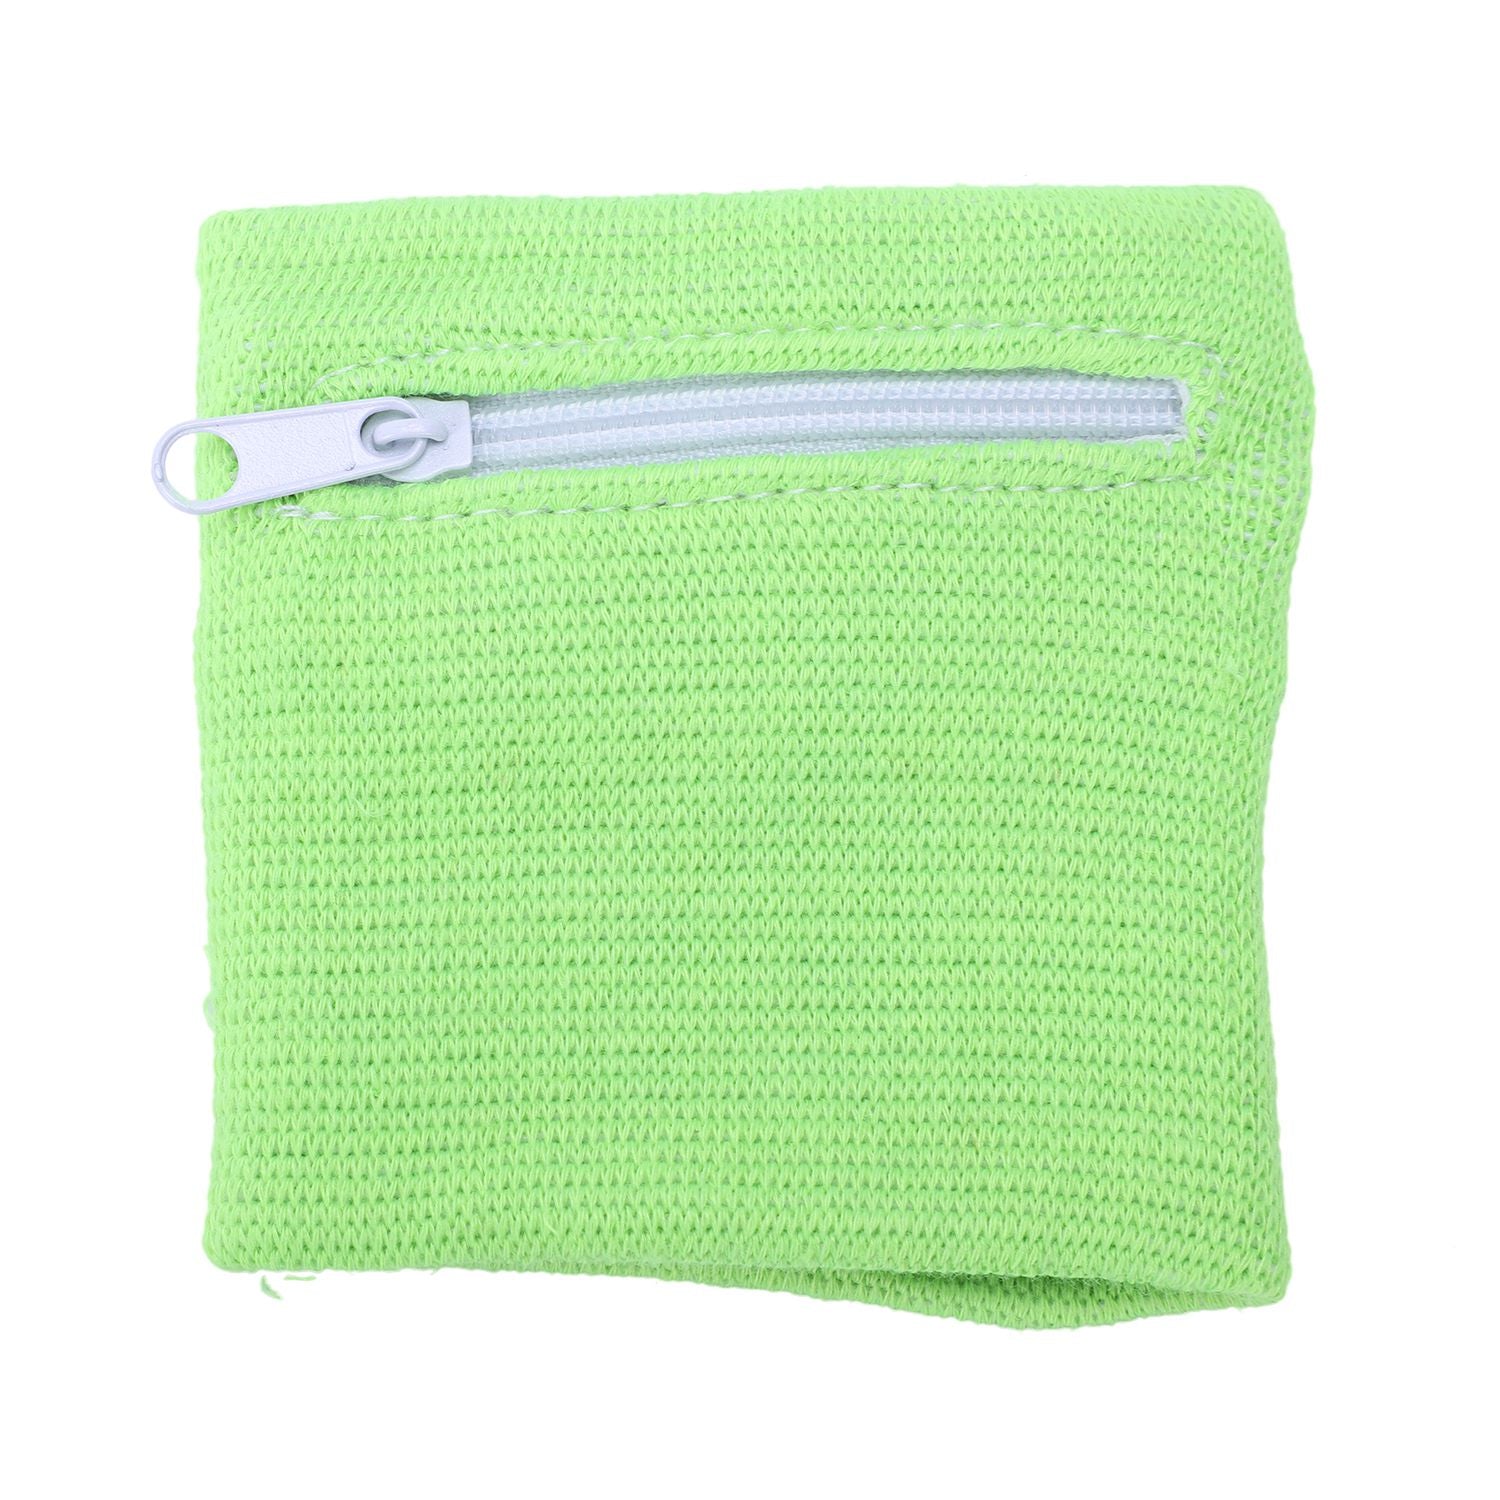 Wiping Wrist Bag Coin Purse Key Bag Wrist Belt Purse Sweatband Green - ebowsos